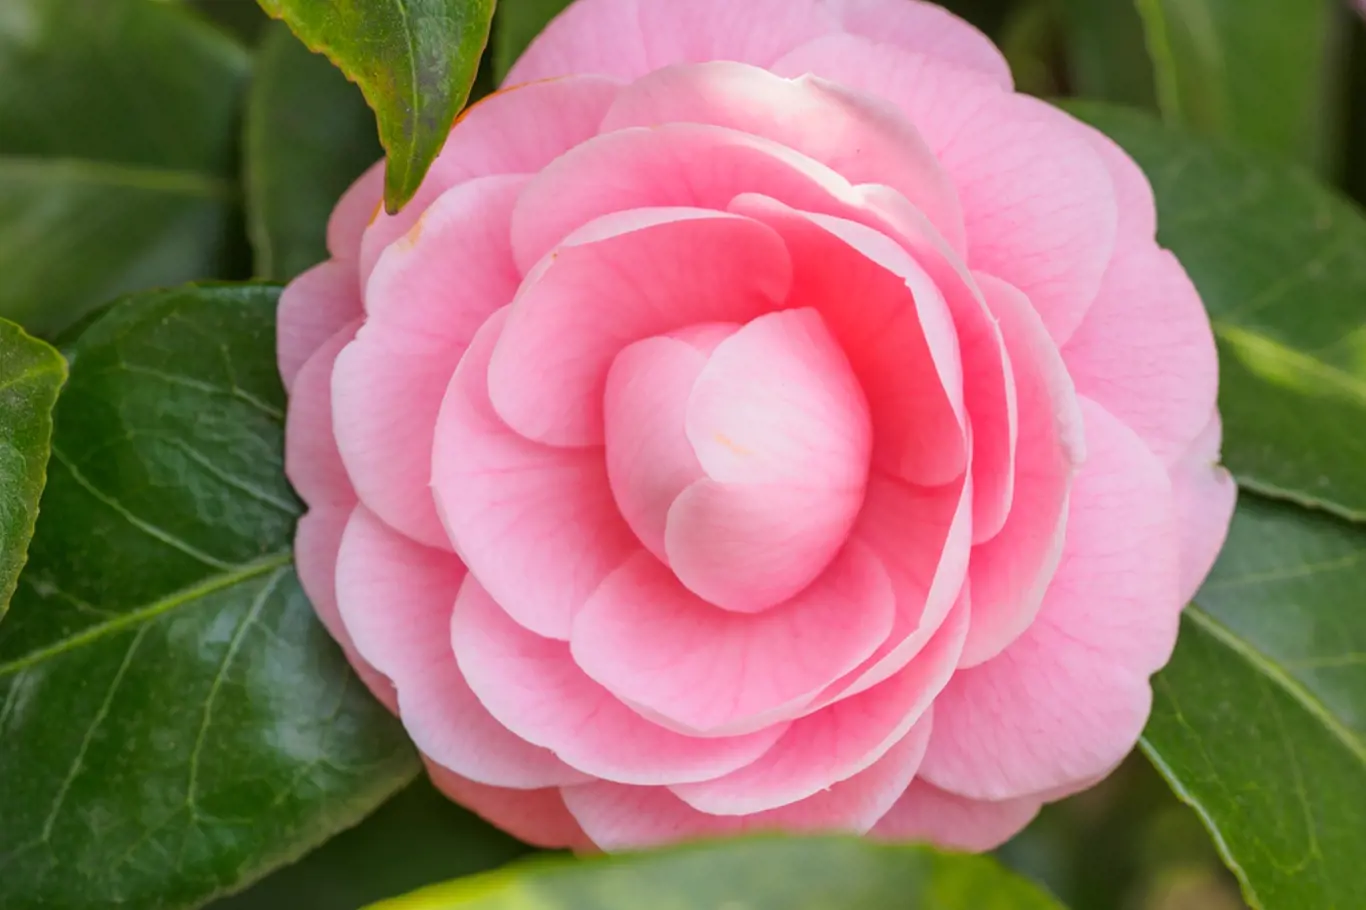 Kamélie - růžový květ.